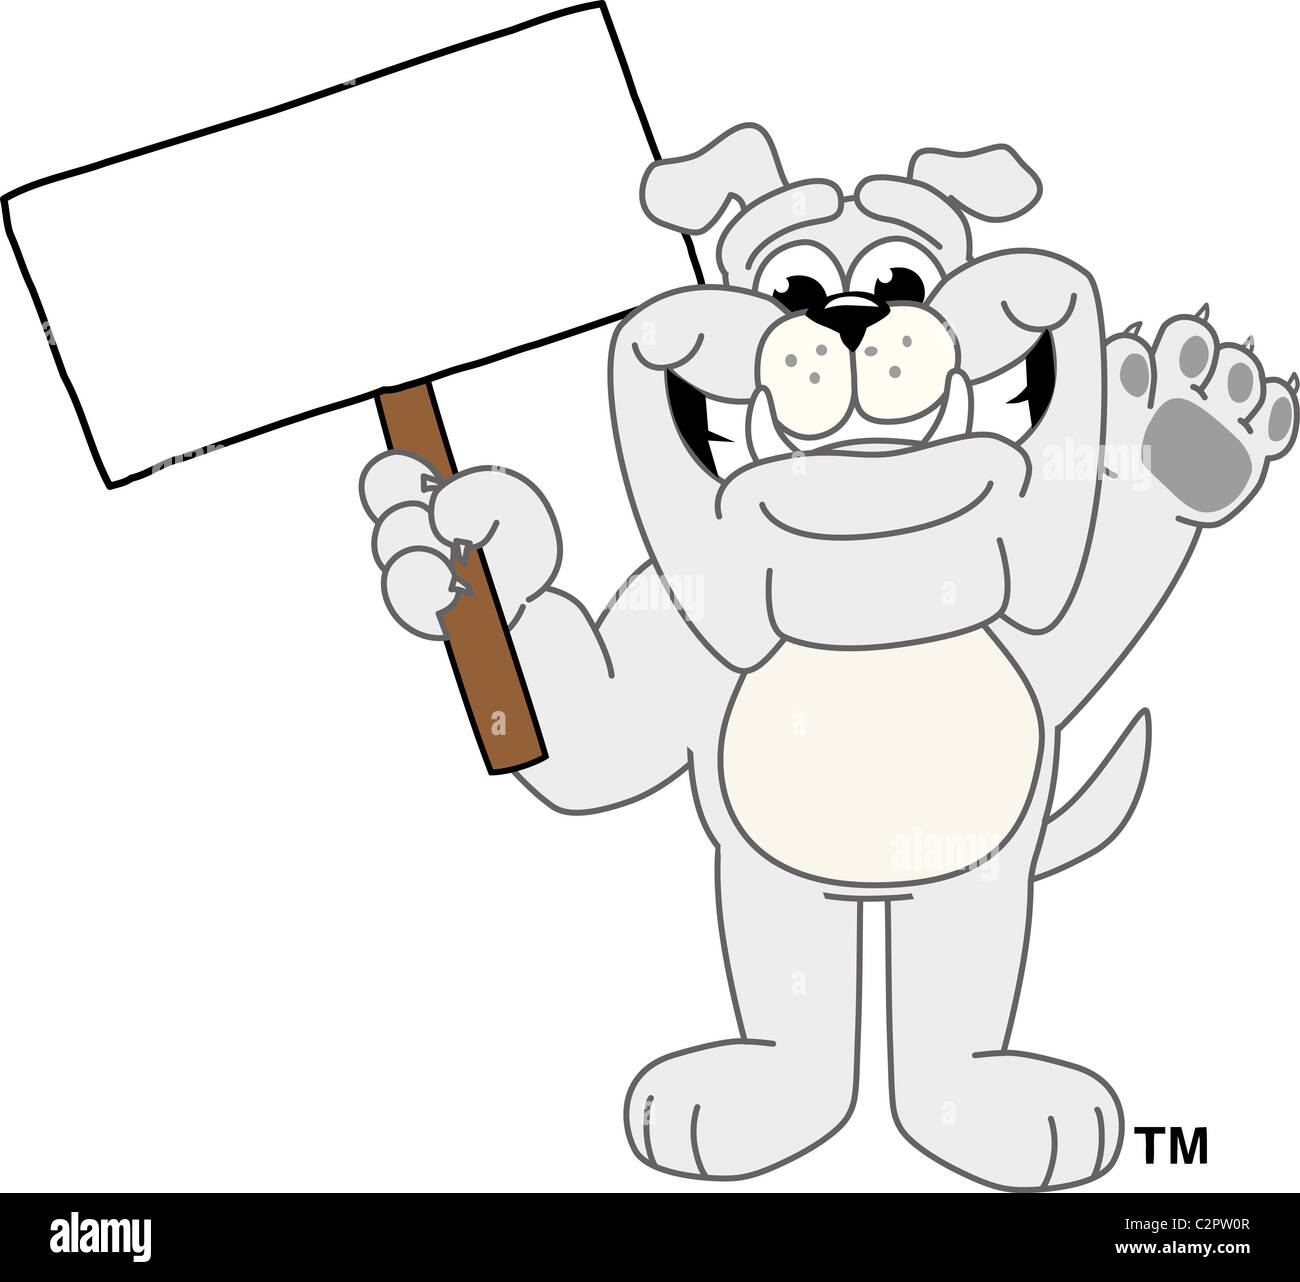 Cartoon Bulldog High Resolution Stock Photography And Images Alamy